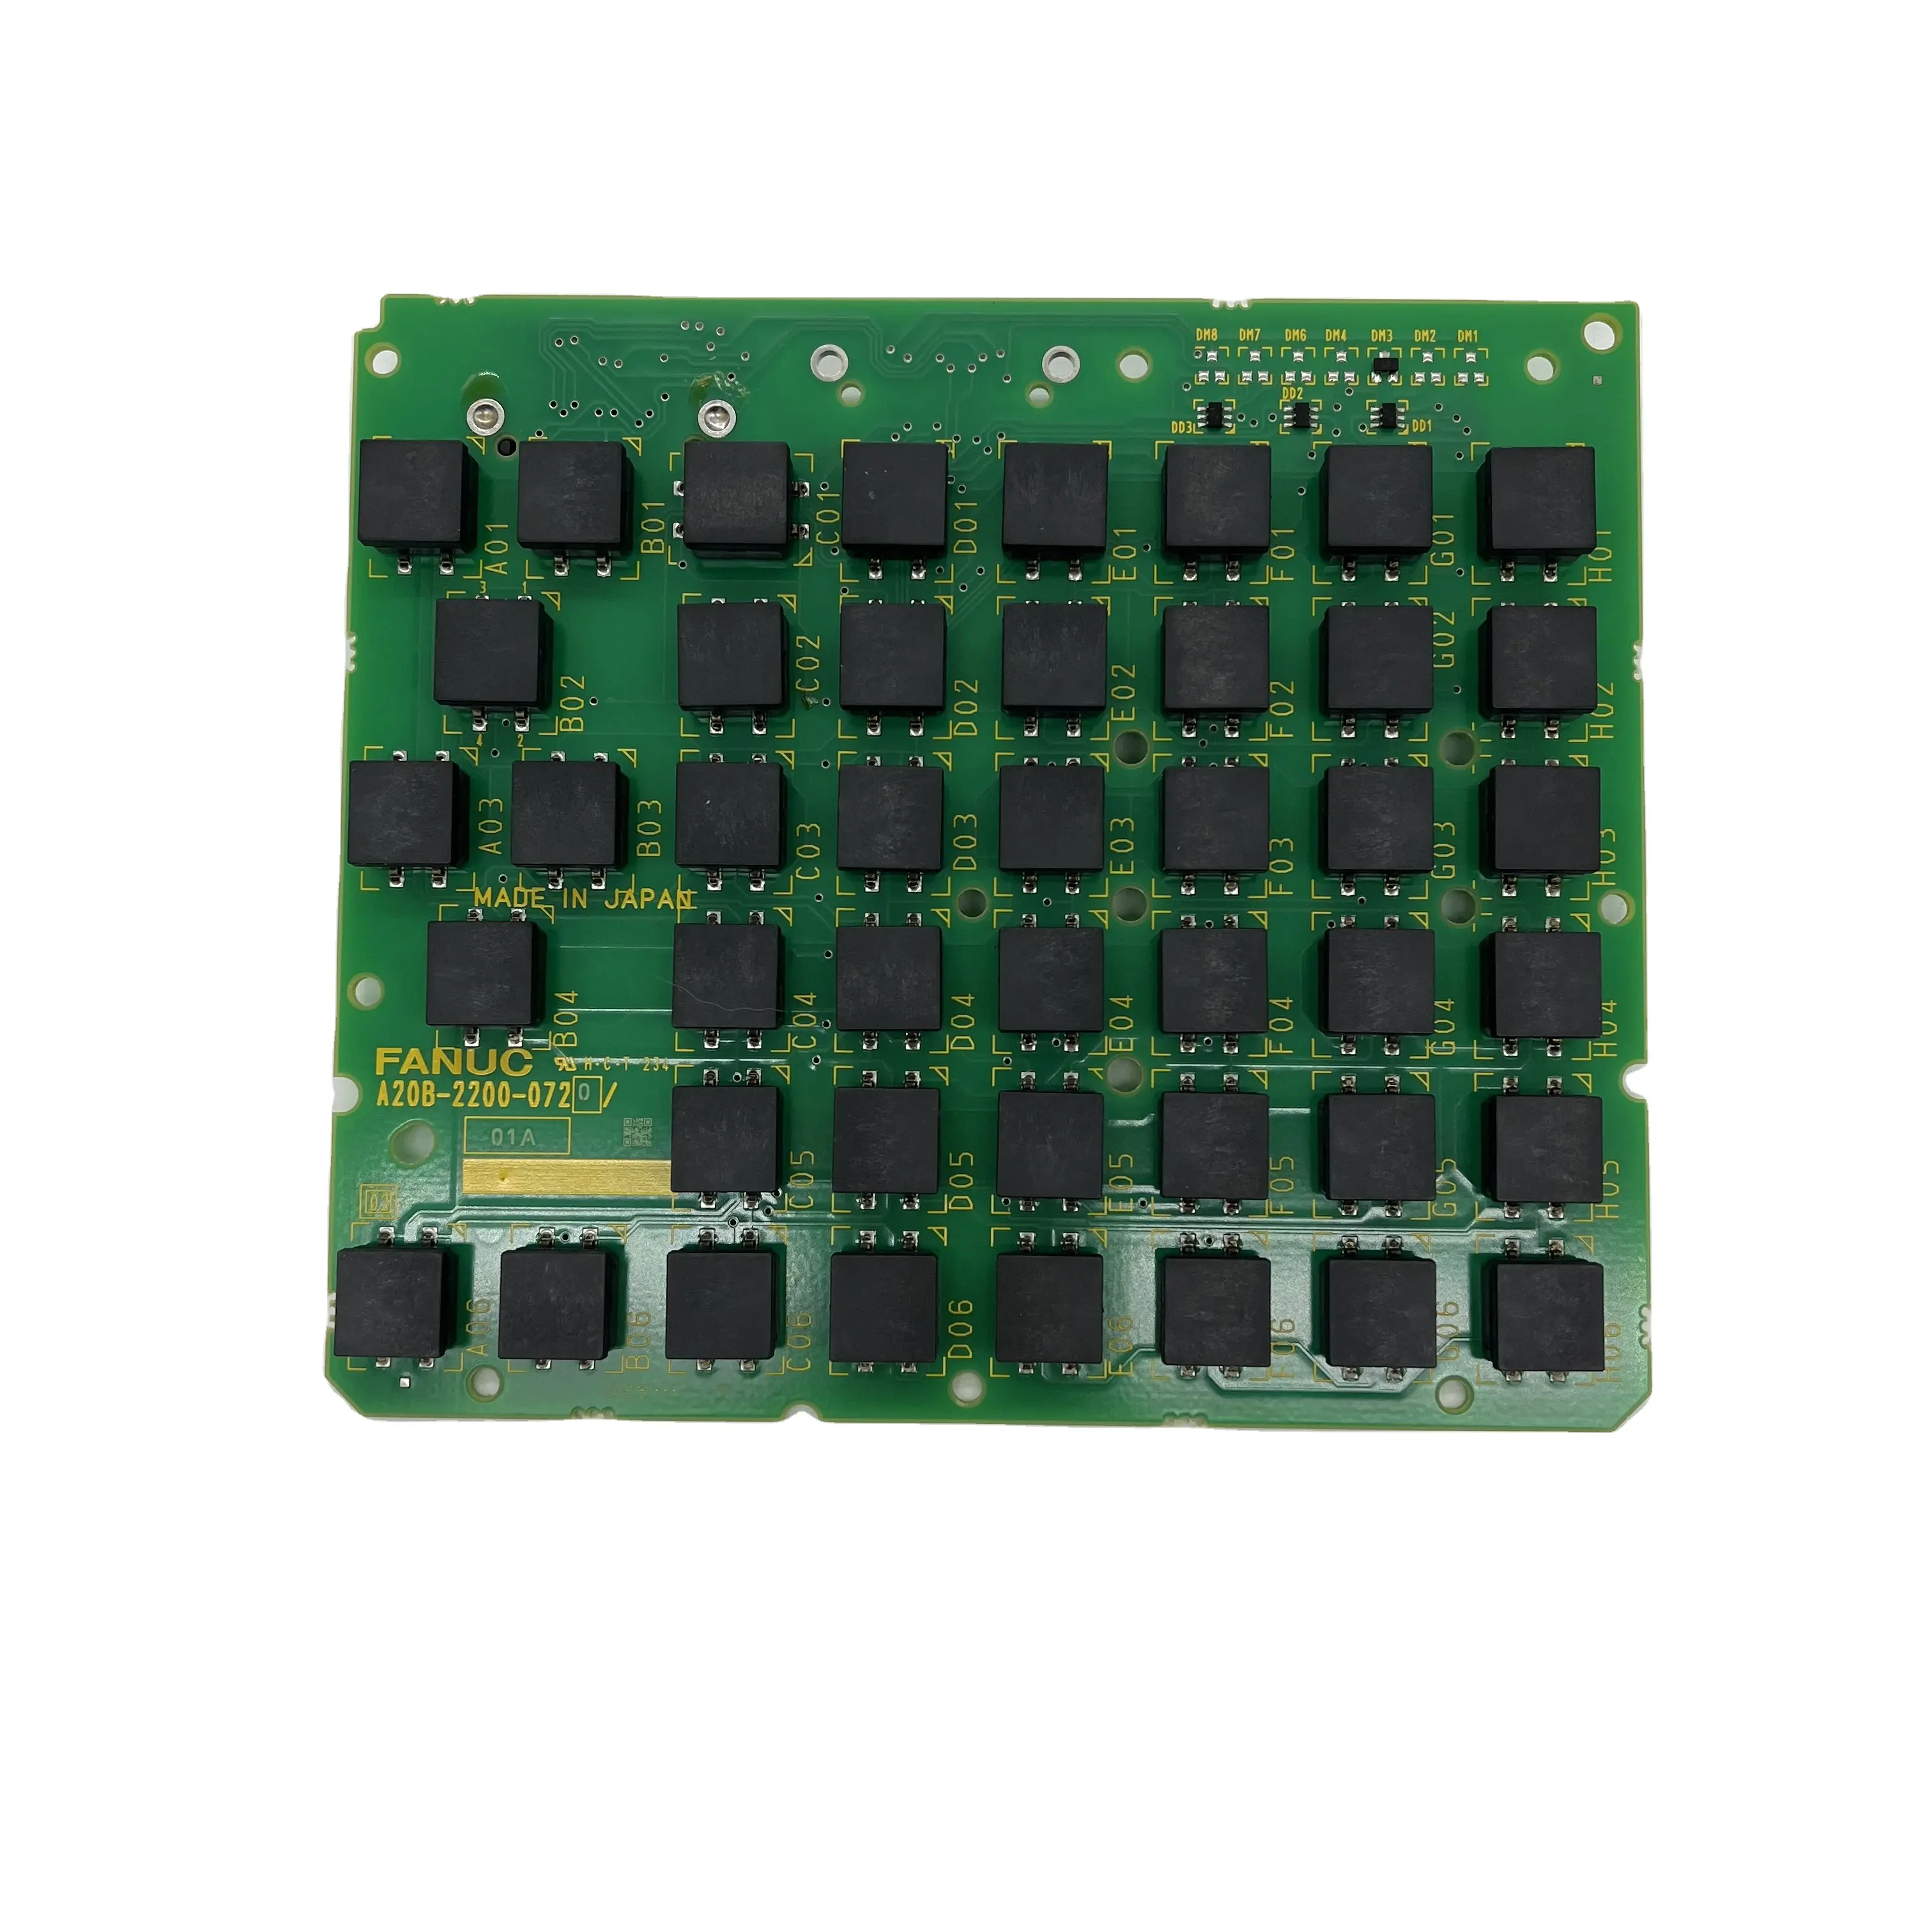 CNC Original Plc Fanuc Keyboard A20B-2200-0720